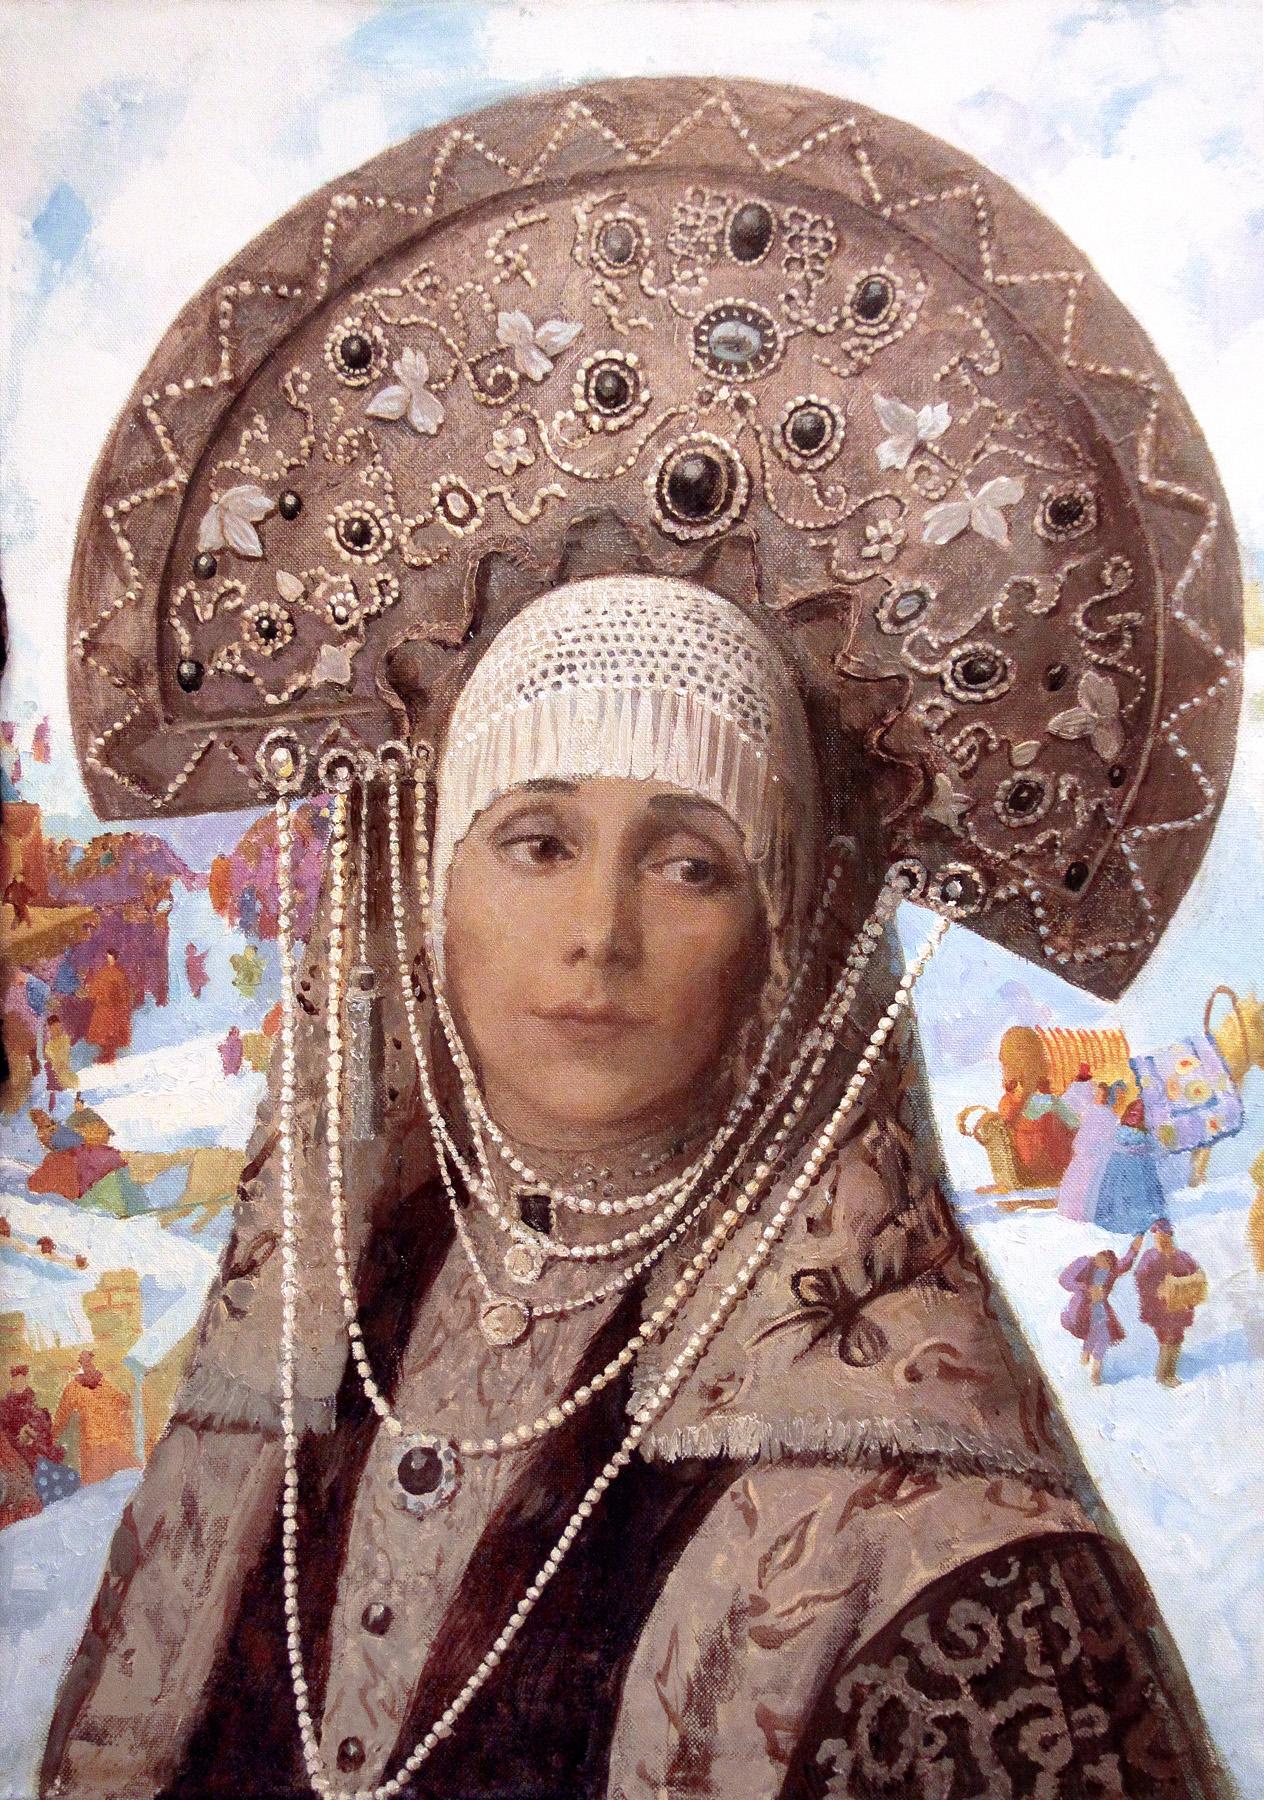 Tamara Karsavina in Russian costume. Original modern art painting